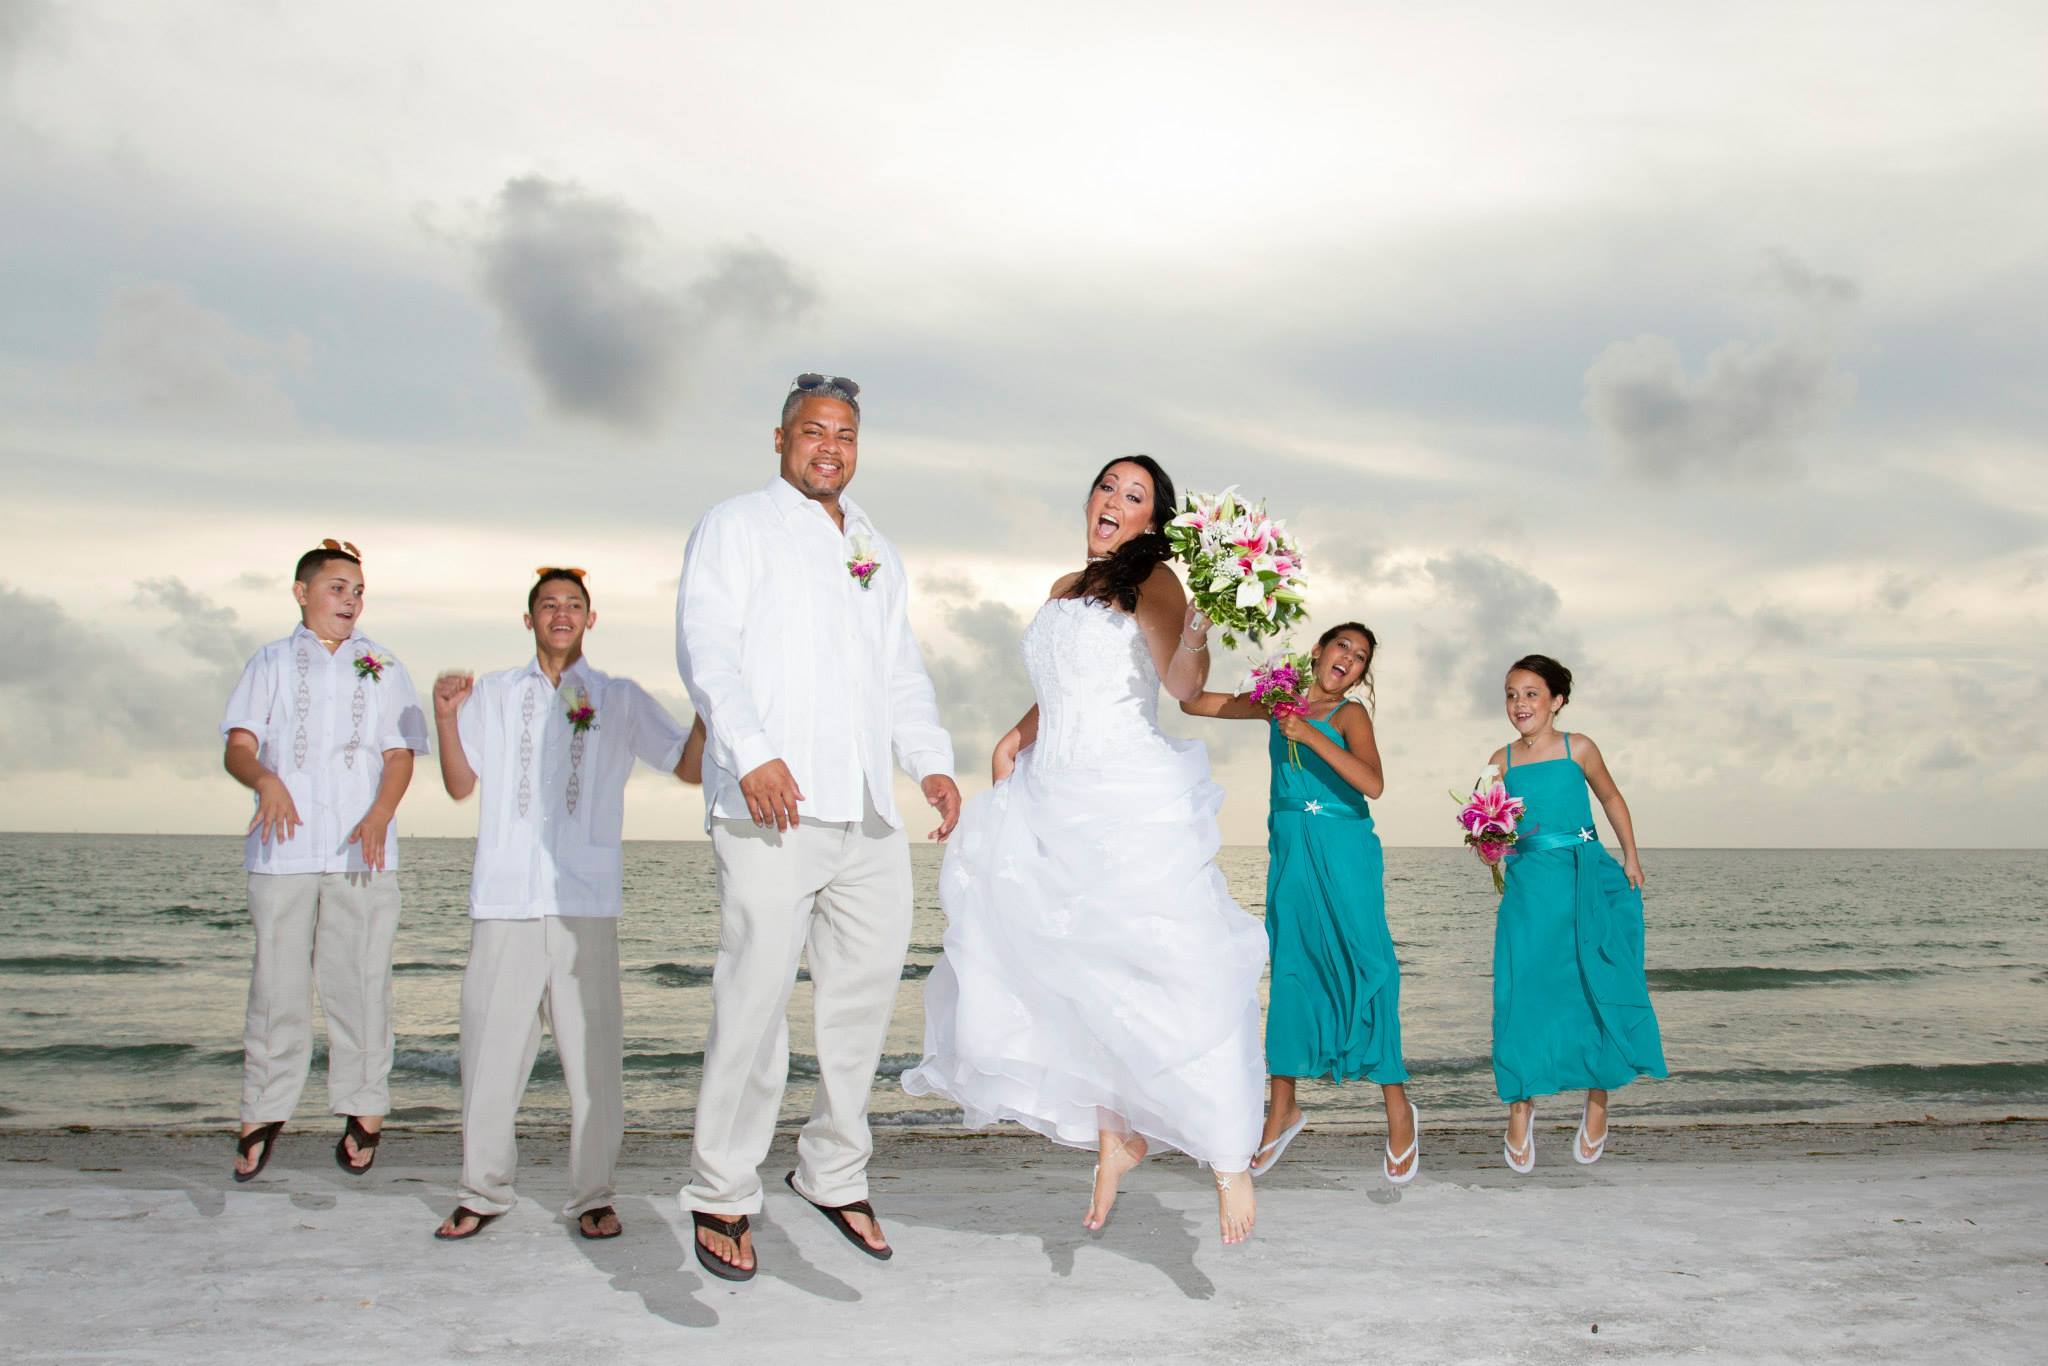 Beach wedding attire for the father of the bride. #guayabera  #beachweddingattire #…